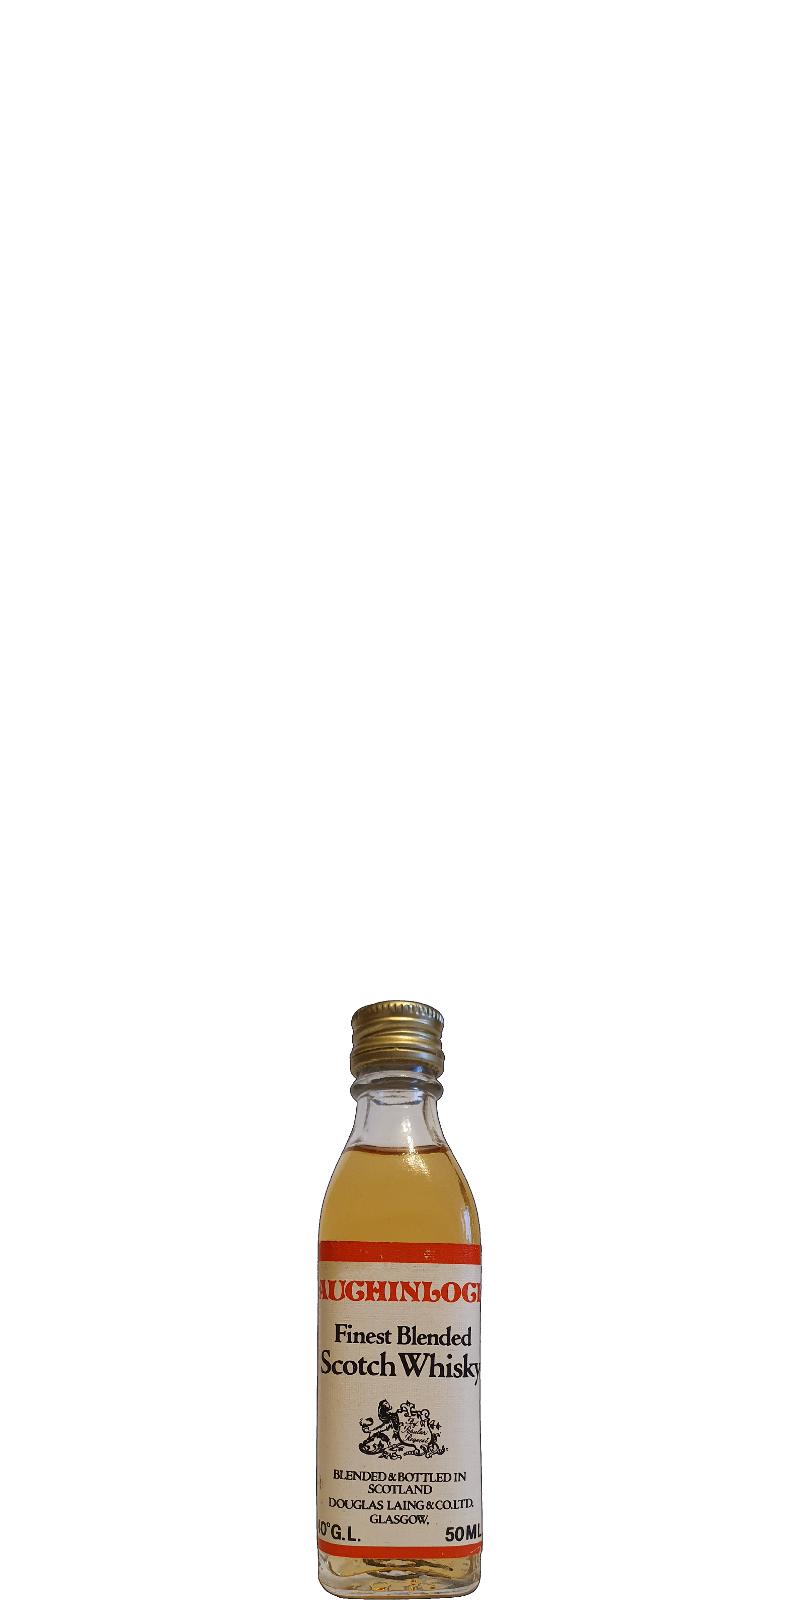 Auchinloch Finest Blended Scotch Whisky